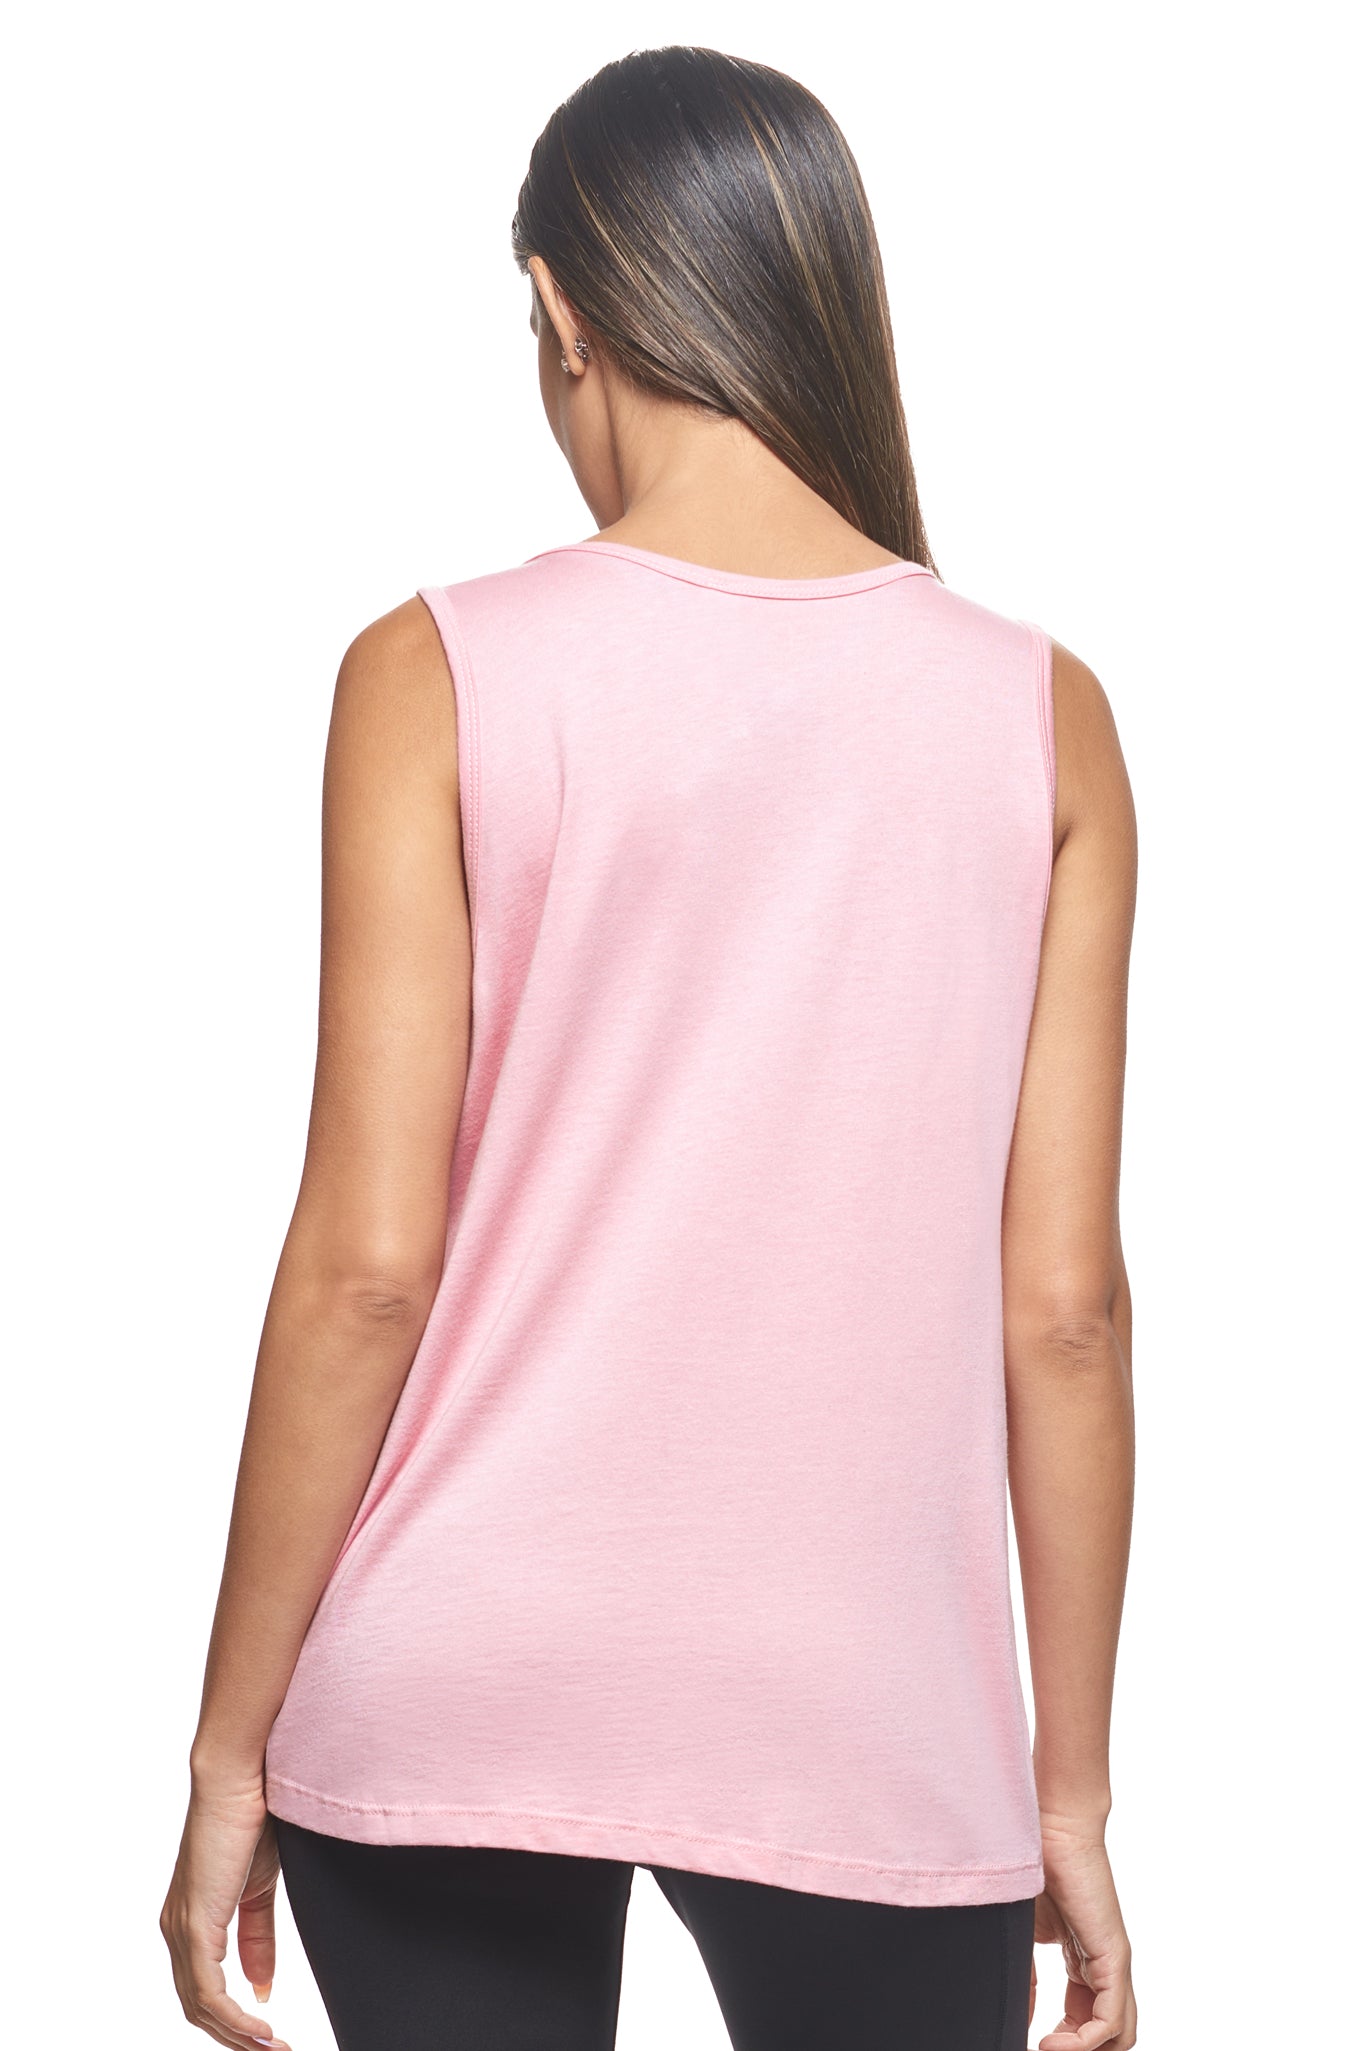 MoCA™ Triangle Tie Tank 🇺🇸🍃 - Expert Brand Apparel#color_pale-pink